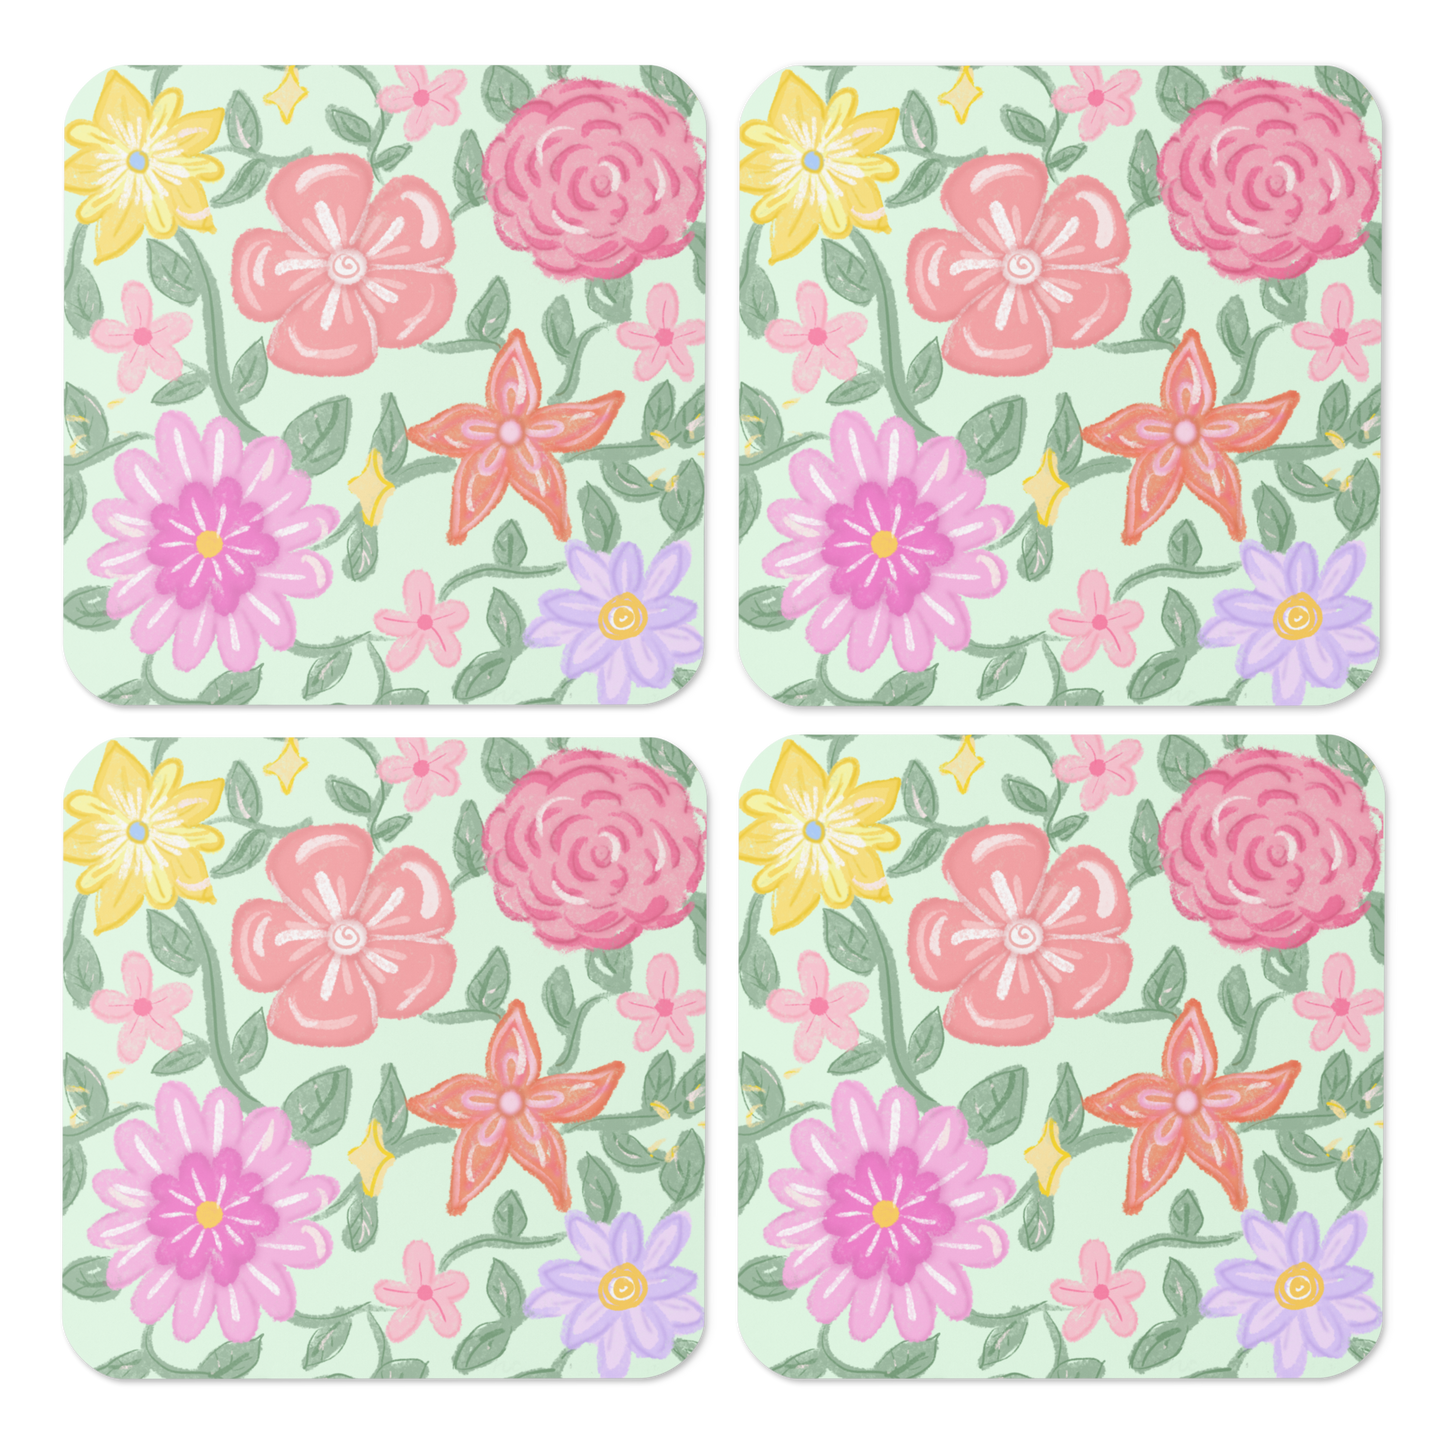 Lush Florals Coaster (Individual Coaster - 1 Unit)